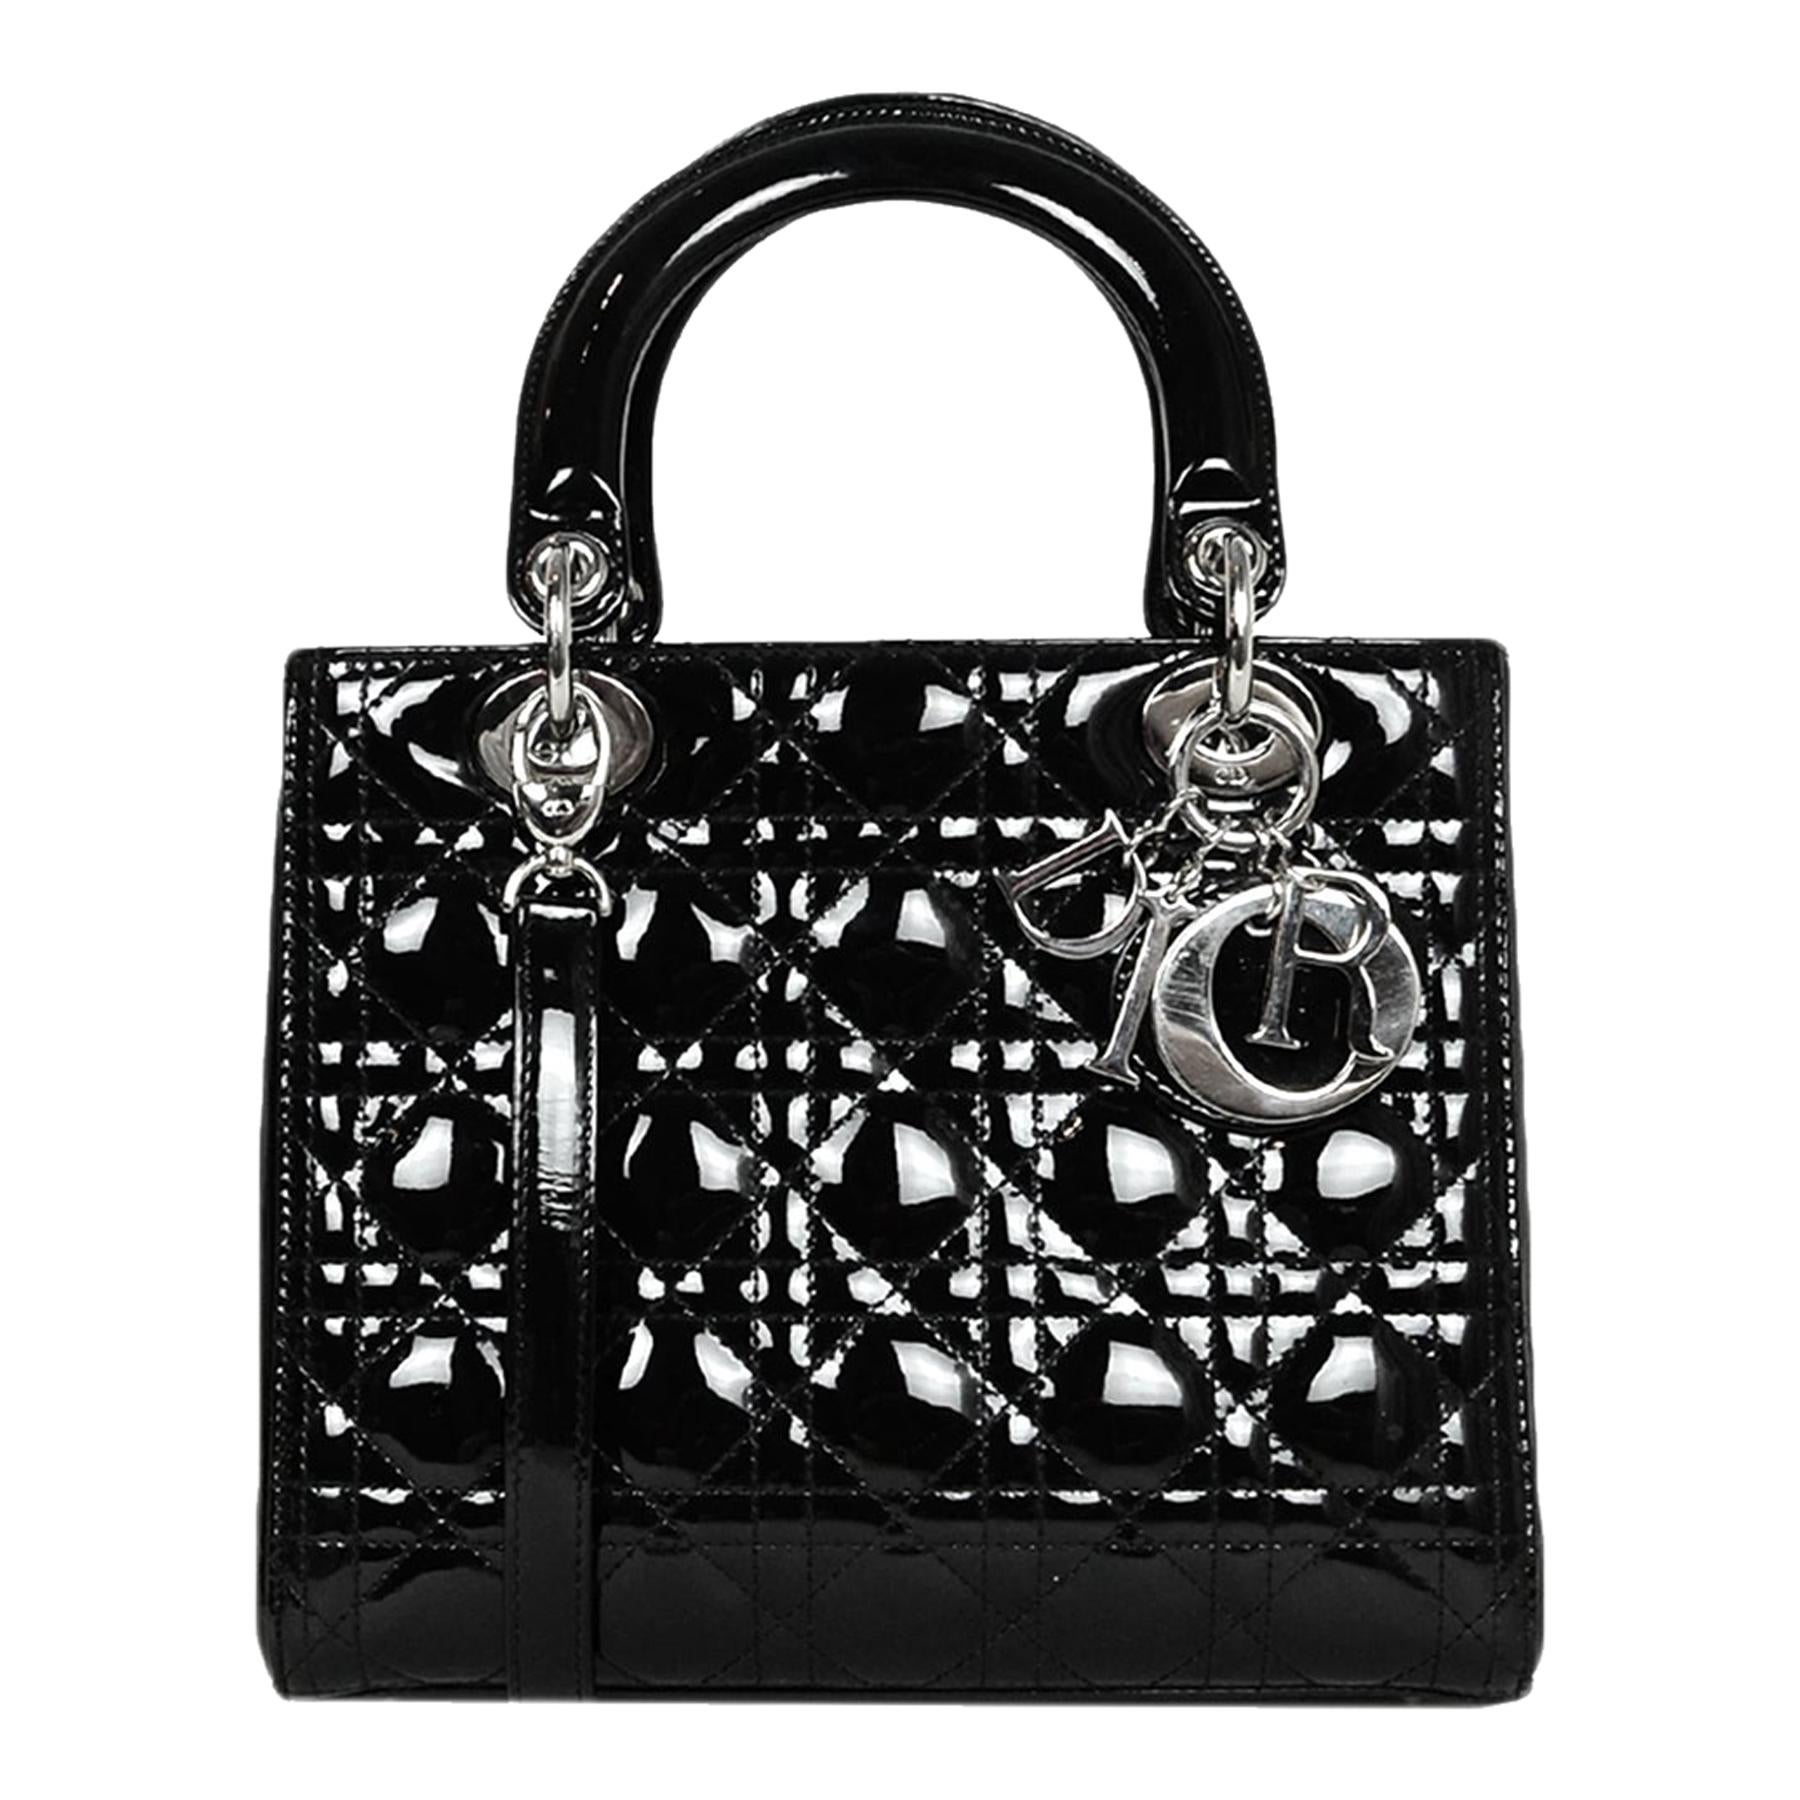 Christian Dior Black Patent Leather Cannage Medium Lady Dior Bag rt. $4, 100